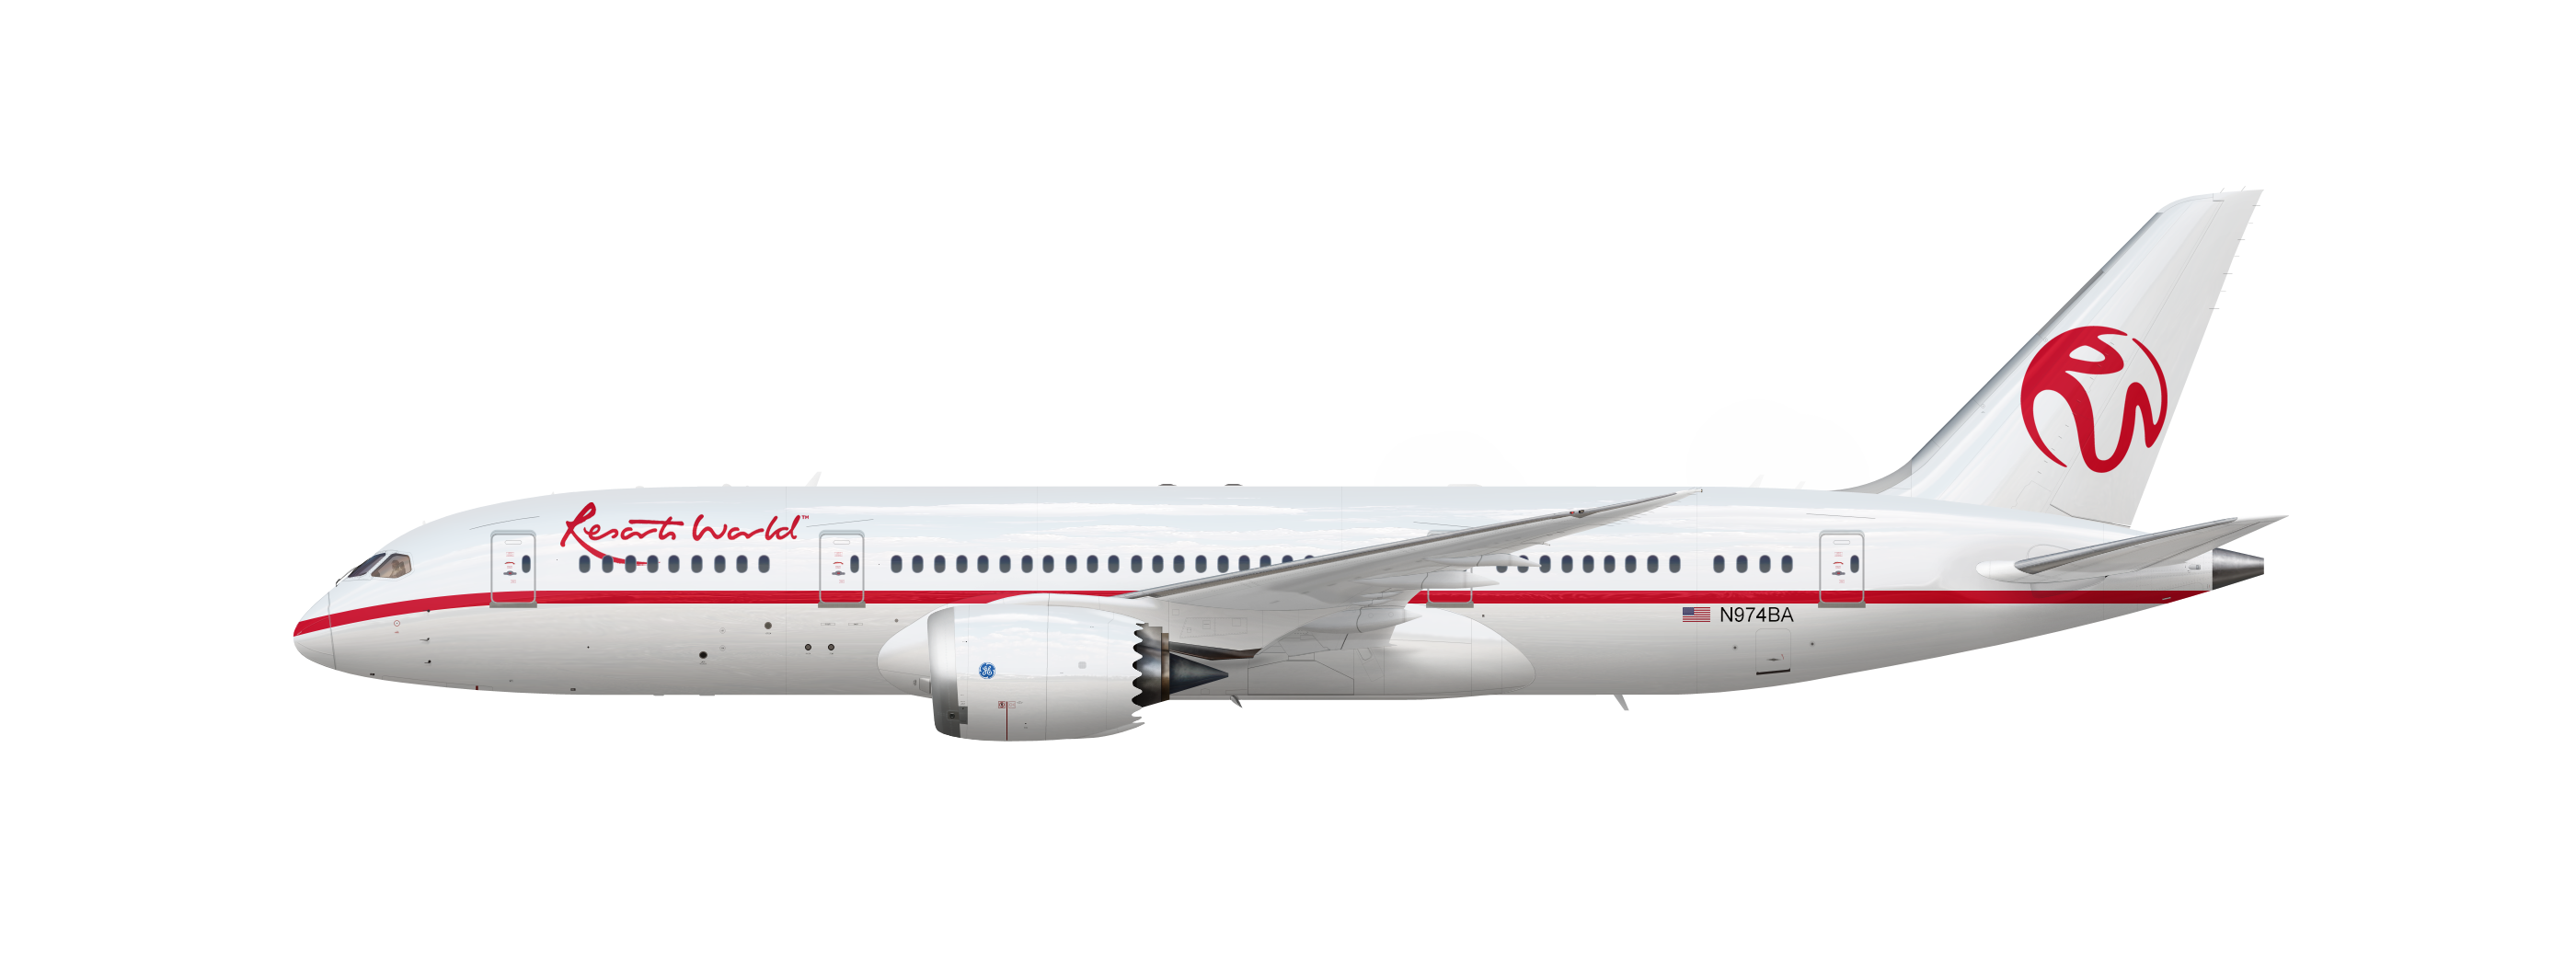 Resorts World Boeing 787-8